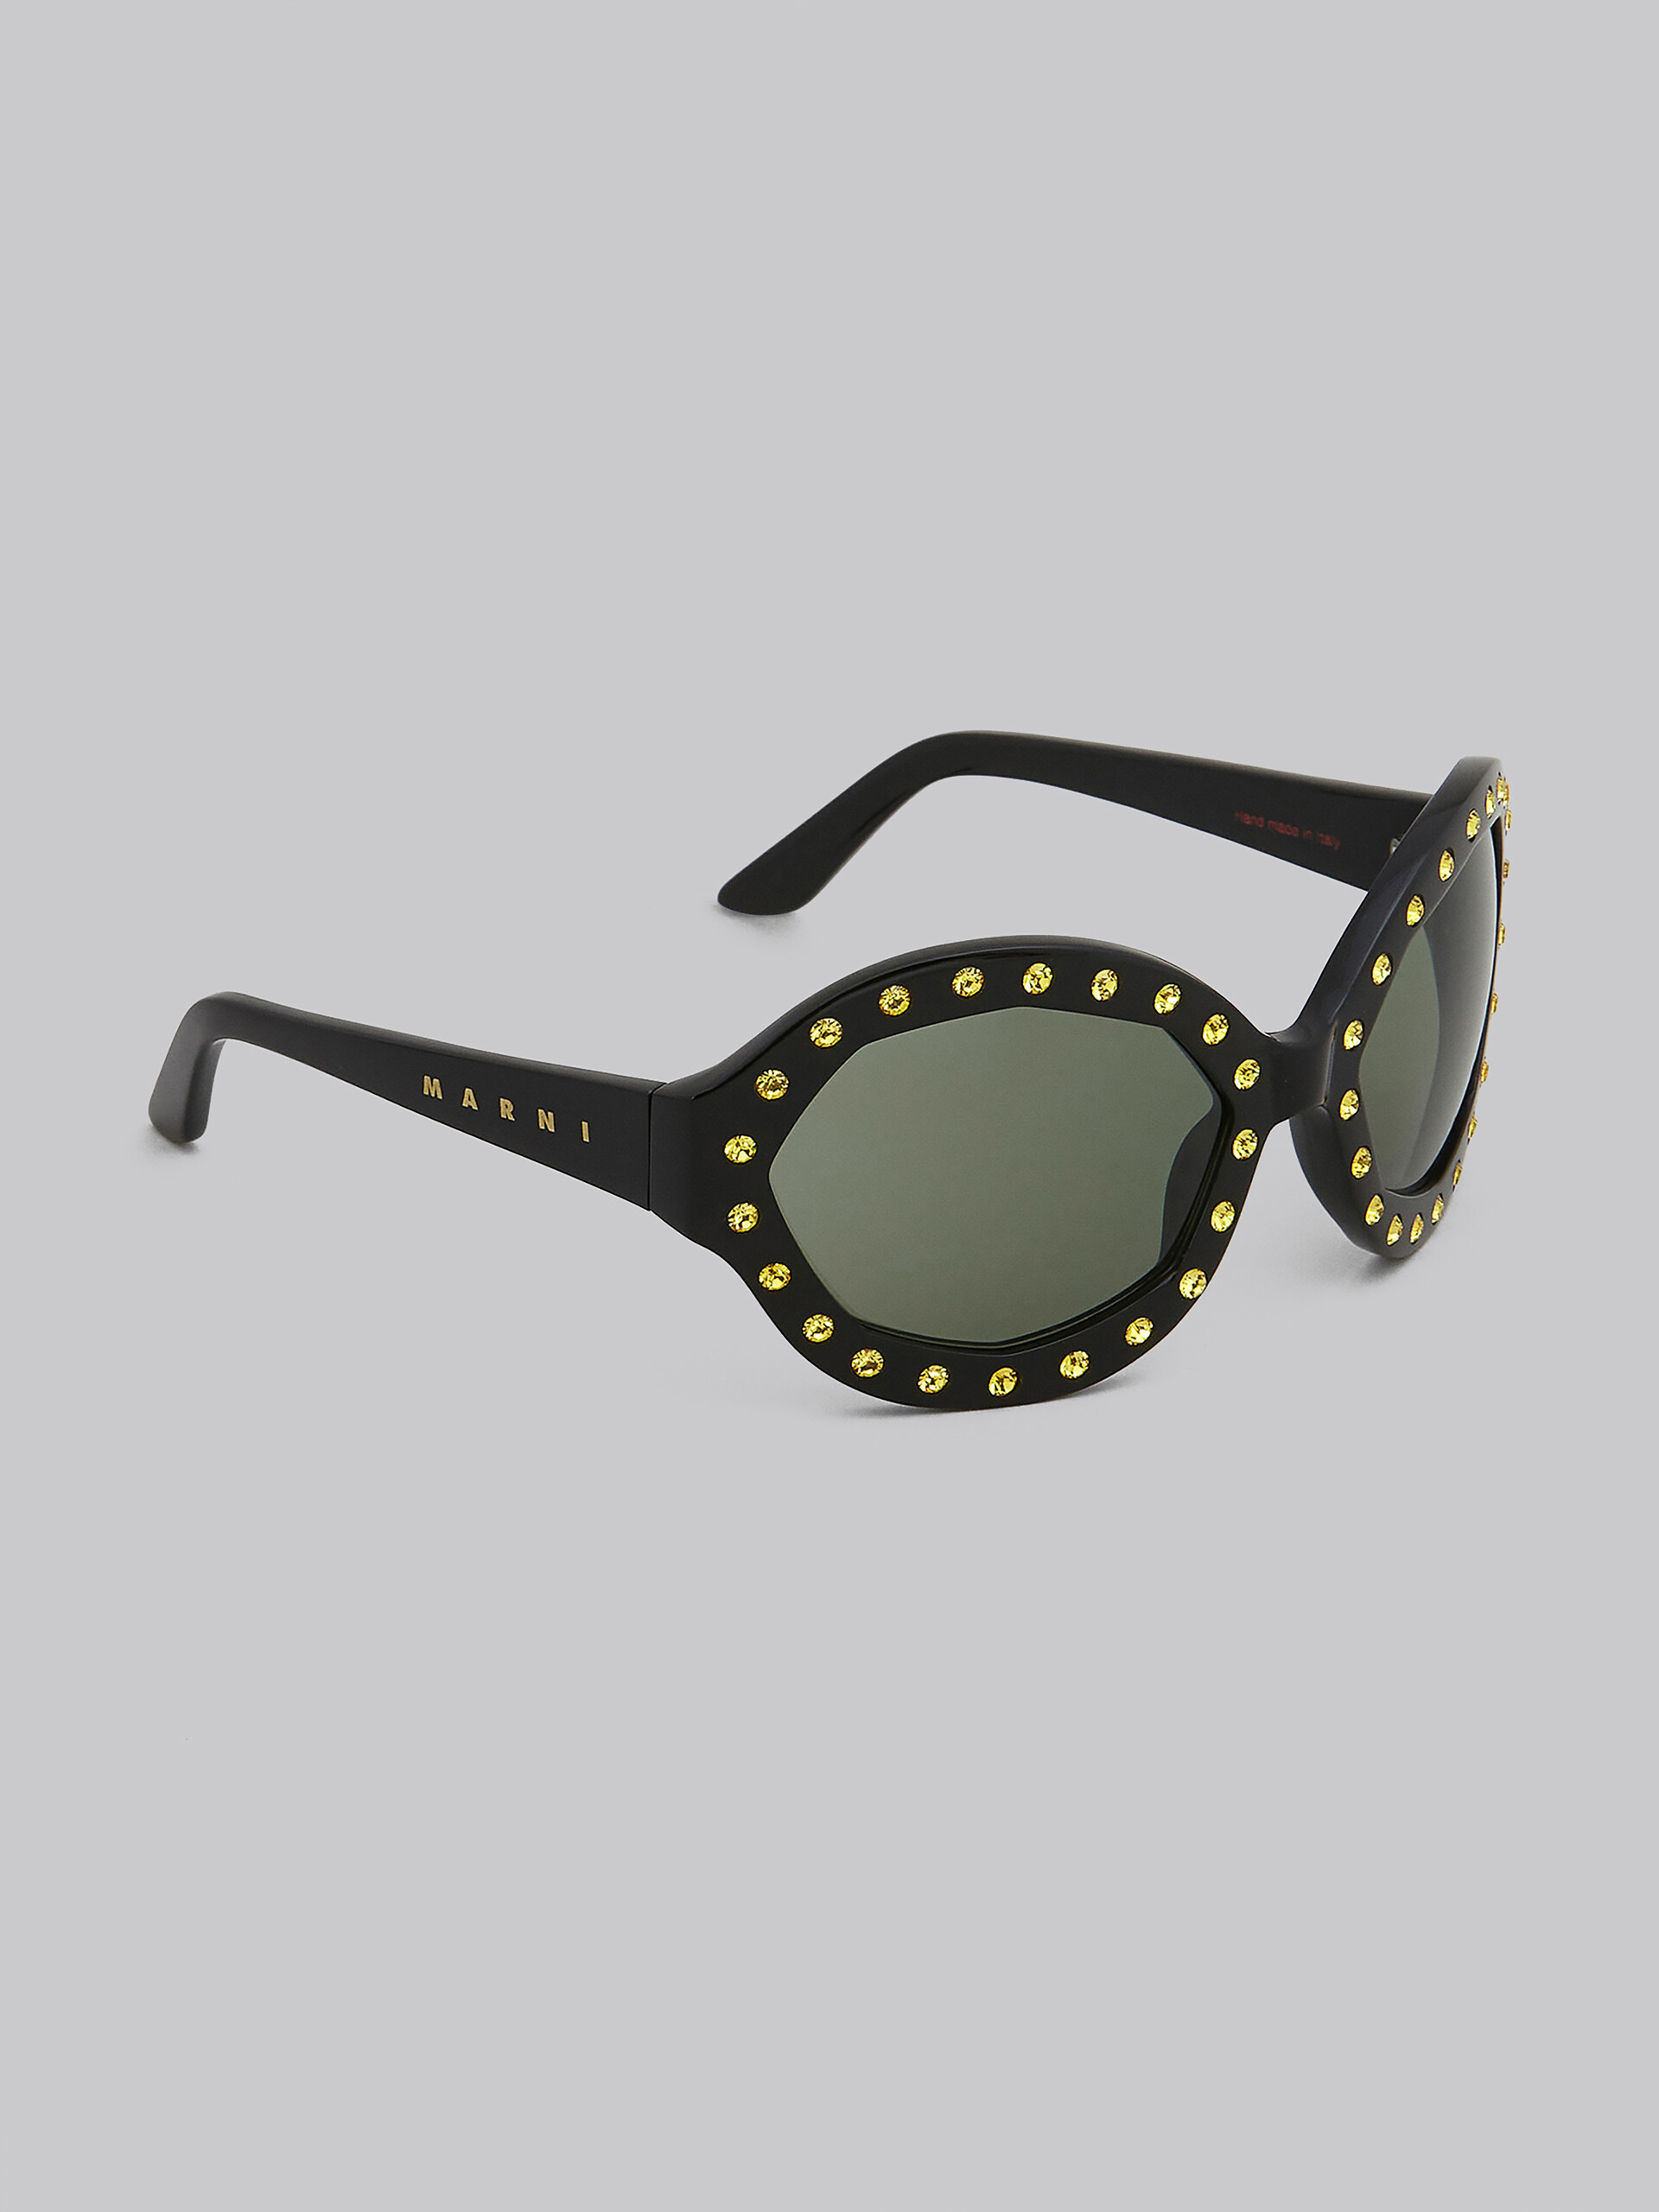 NAICA MINE black acetate sunglasses - Optical - Image 3